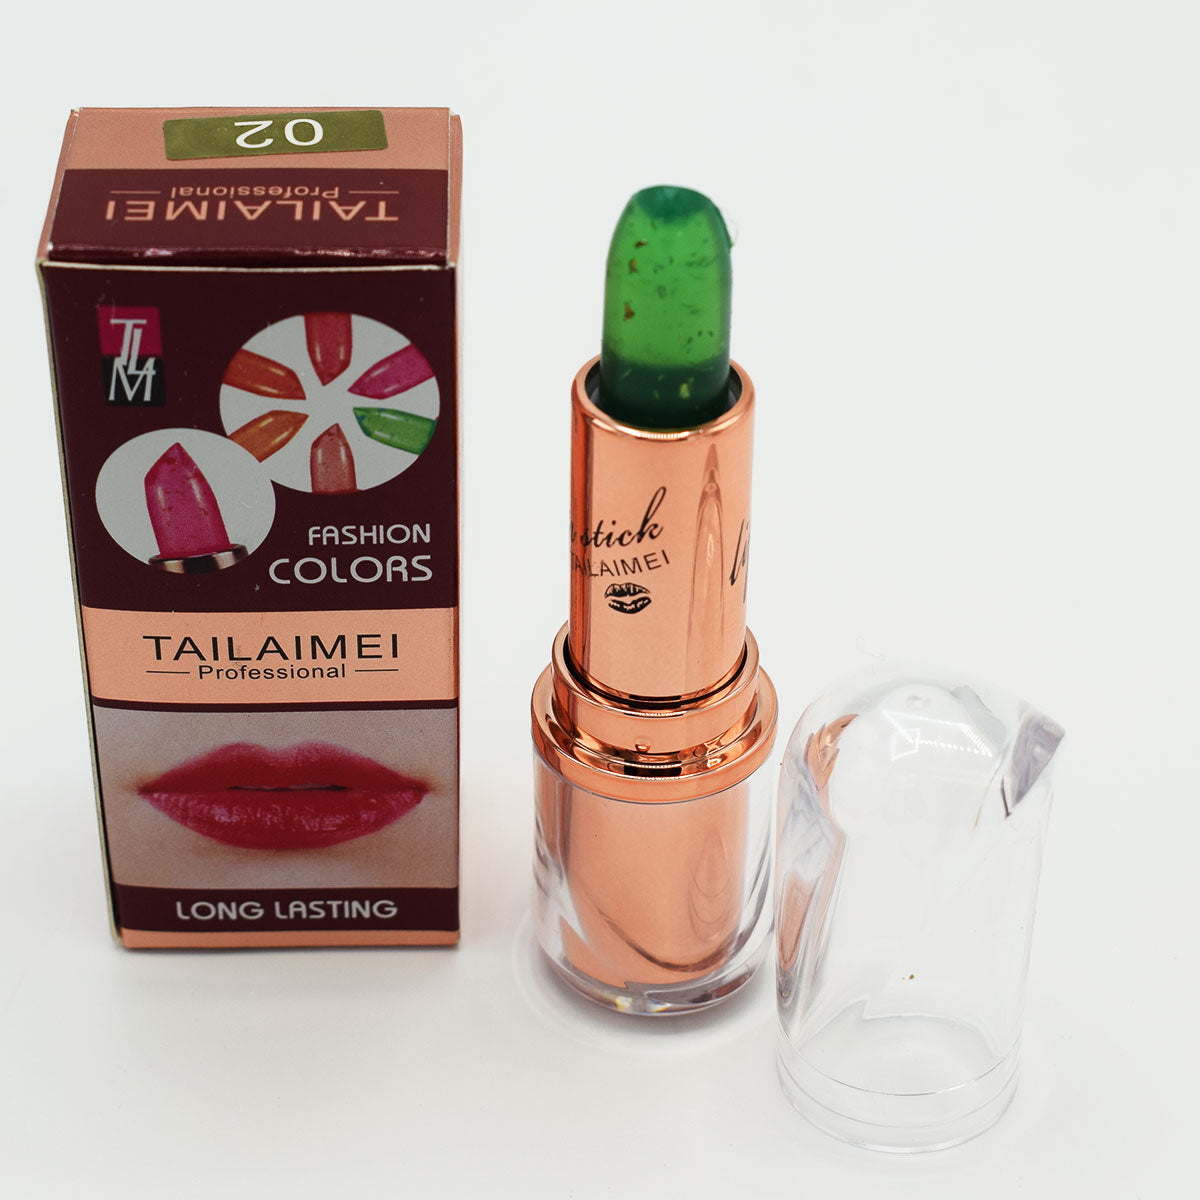 TAILAIMEI – Transparent Color Balm Lipstick